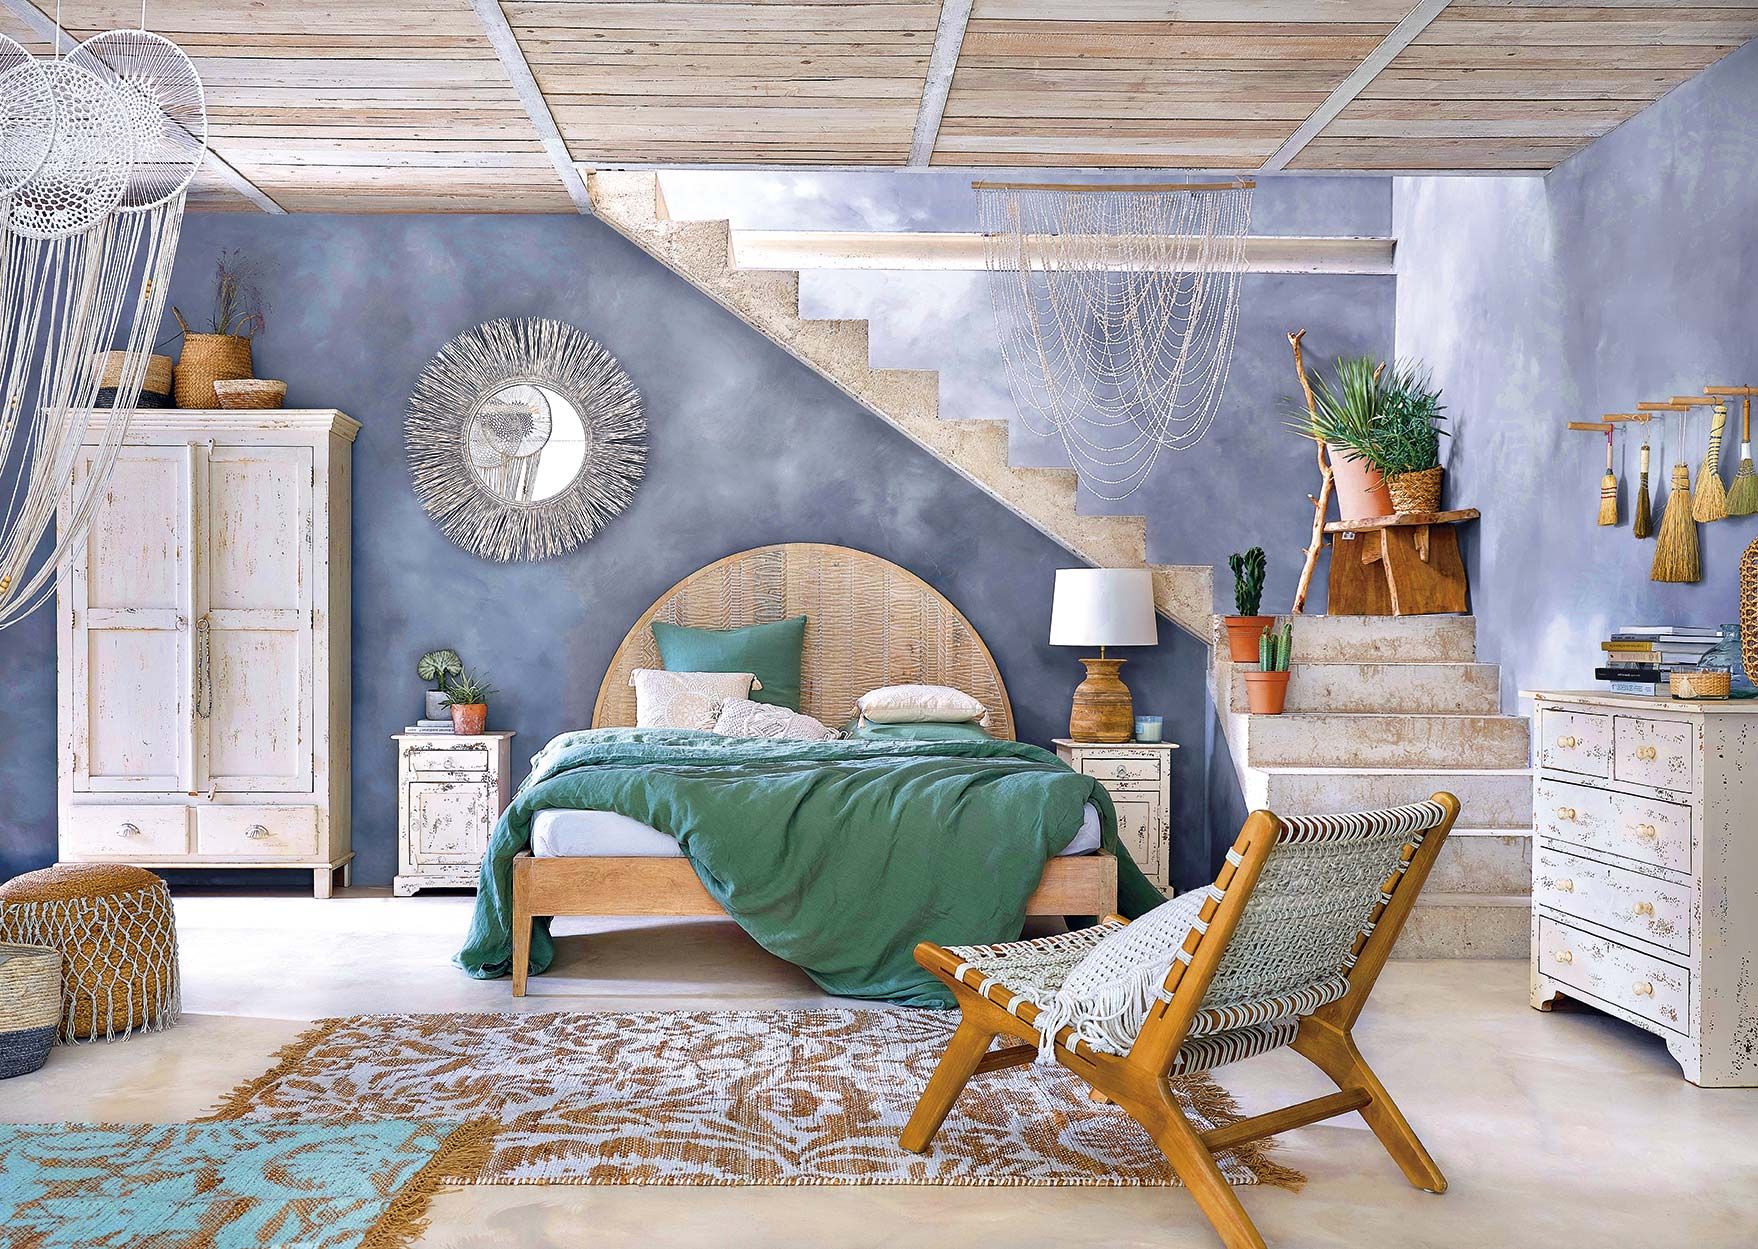 45 Dormitorios pequeños modernos: ideas para decorar